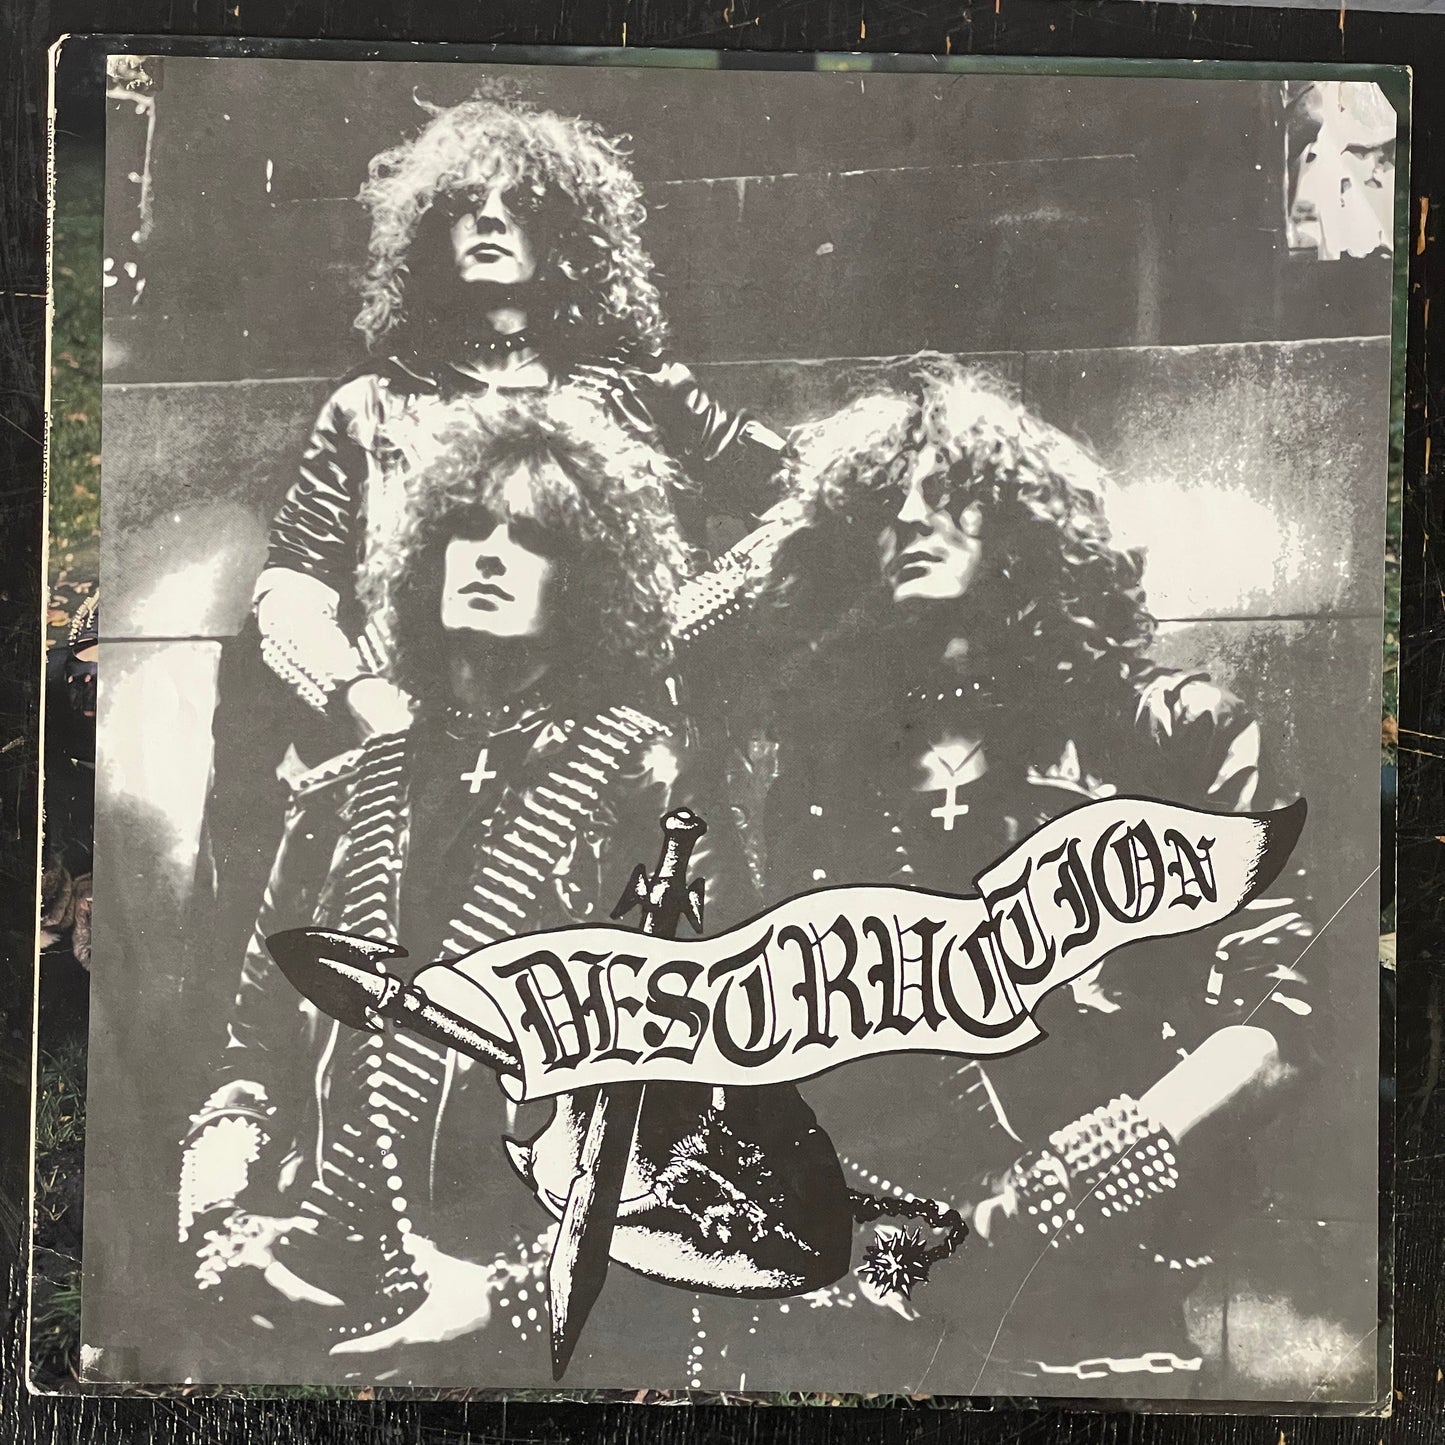 Destruction - Sentence of Death original 12" EP (used)